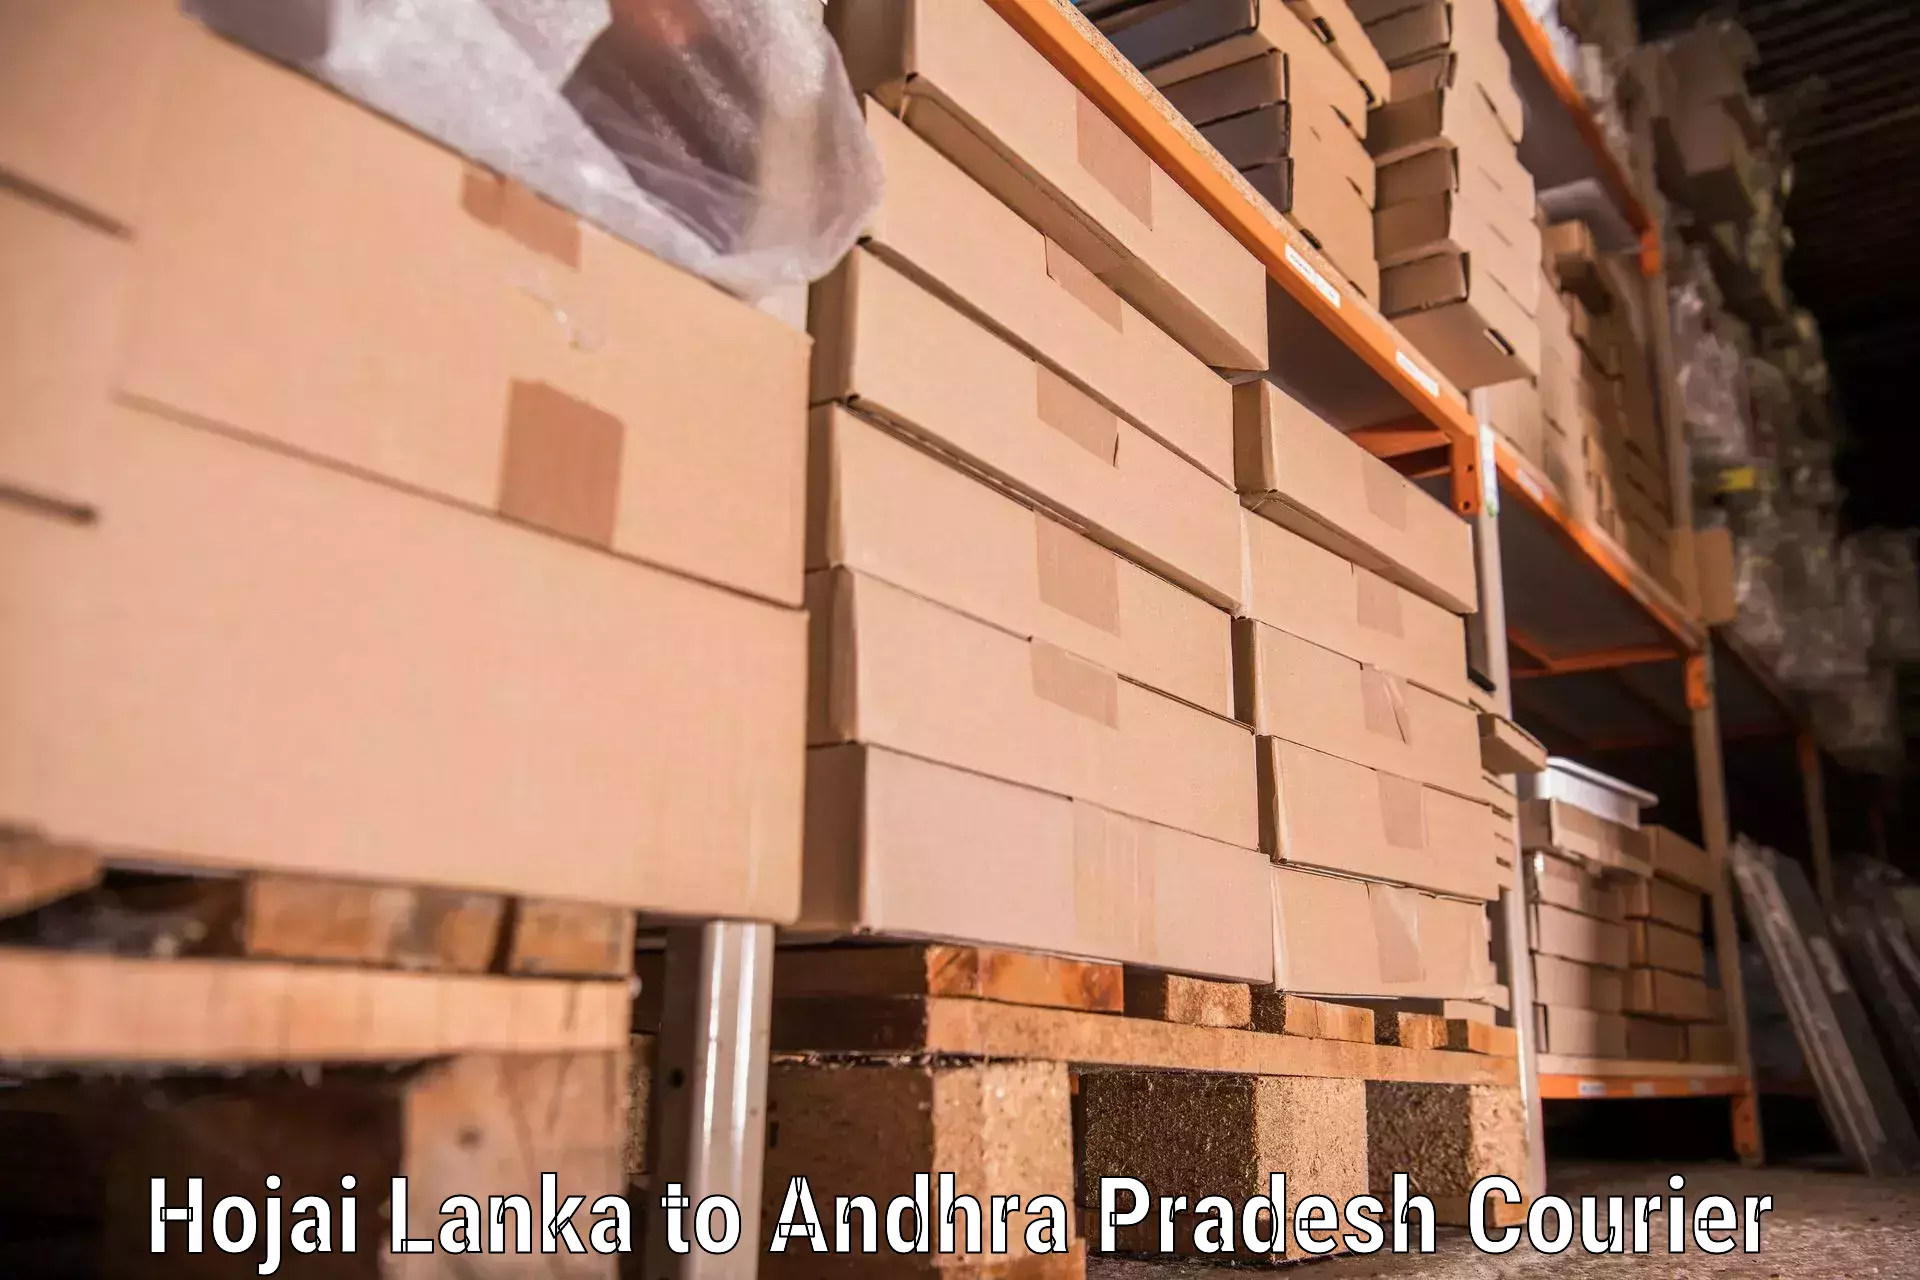 Professional movers and packers Hojai Lanka to Eluru